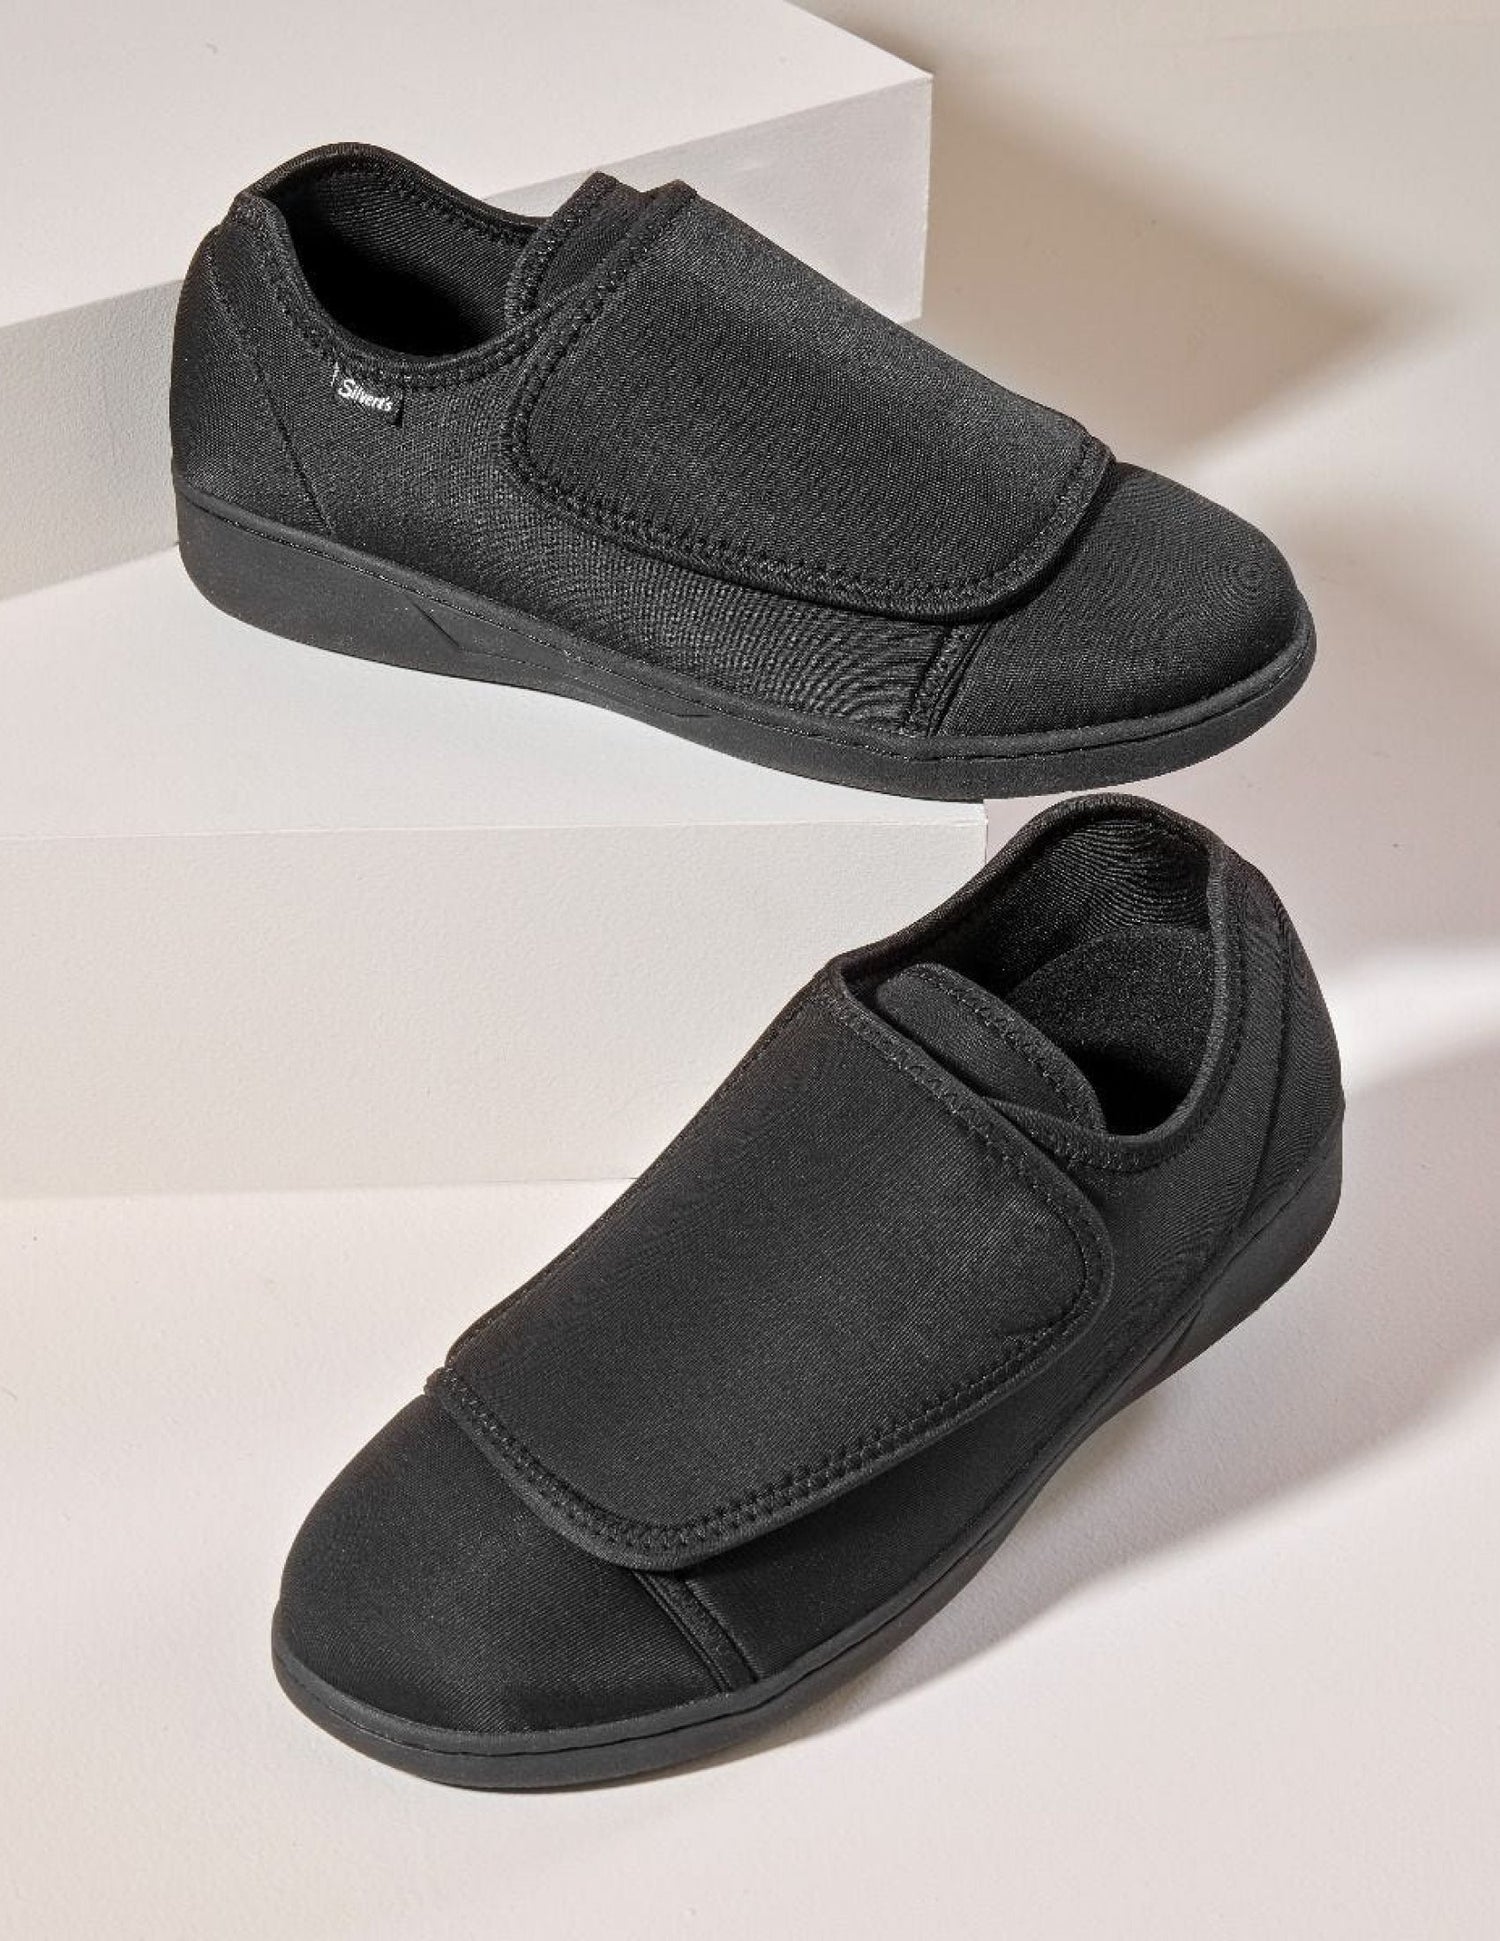 Sketchers Velcro Athletic Shoes for Men | Mercari